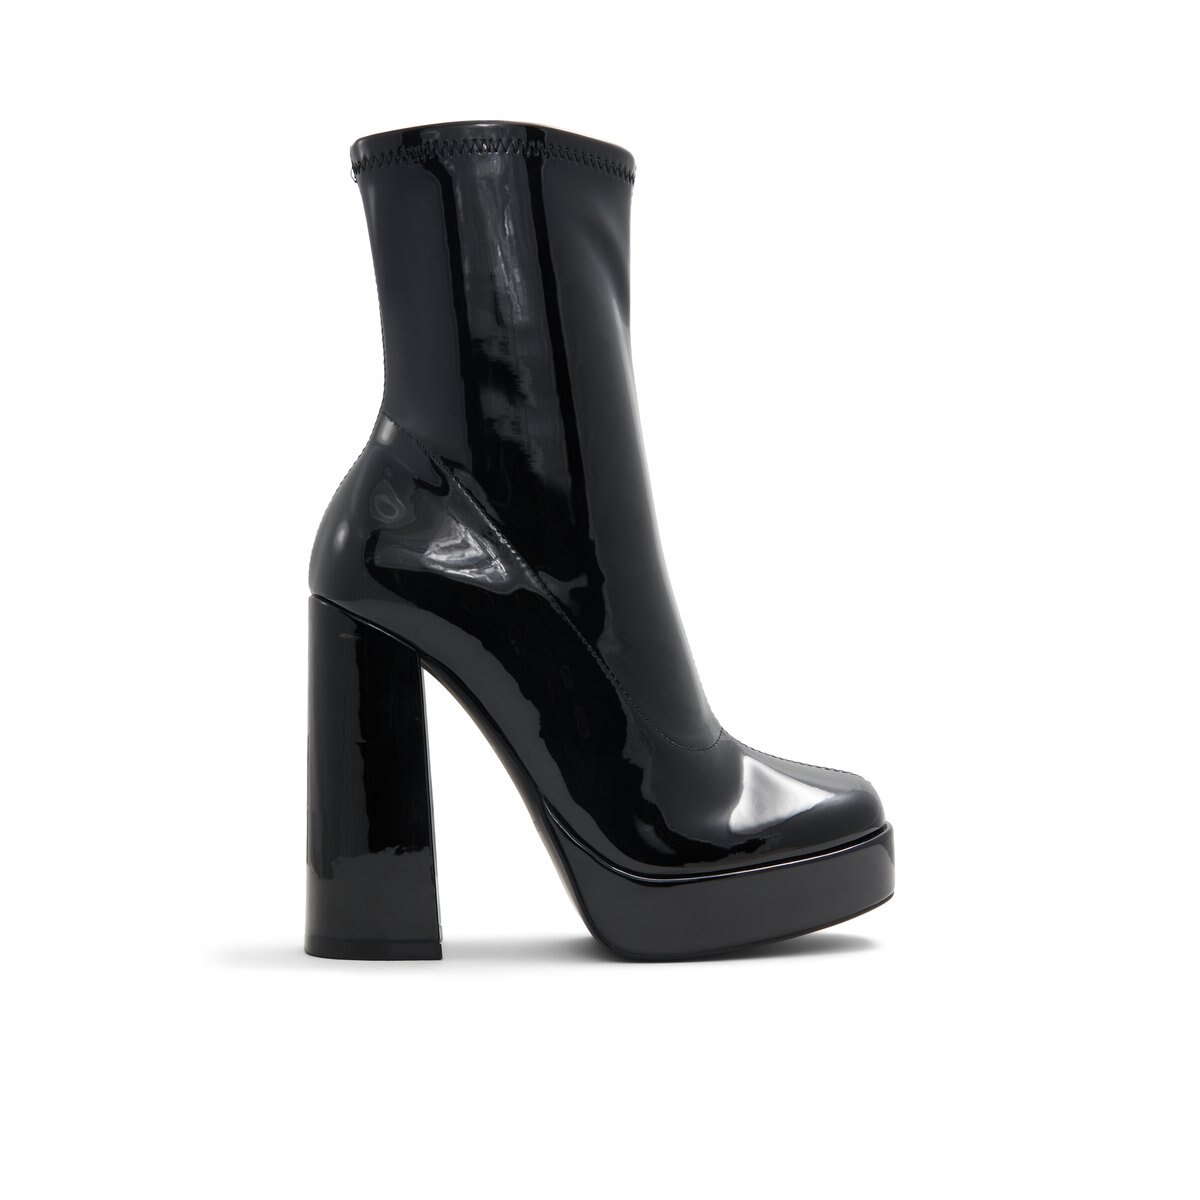 Santana Boots Women's Size 90M 108 Black Leather Tall Heeled Canada  Waterproof | eBay